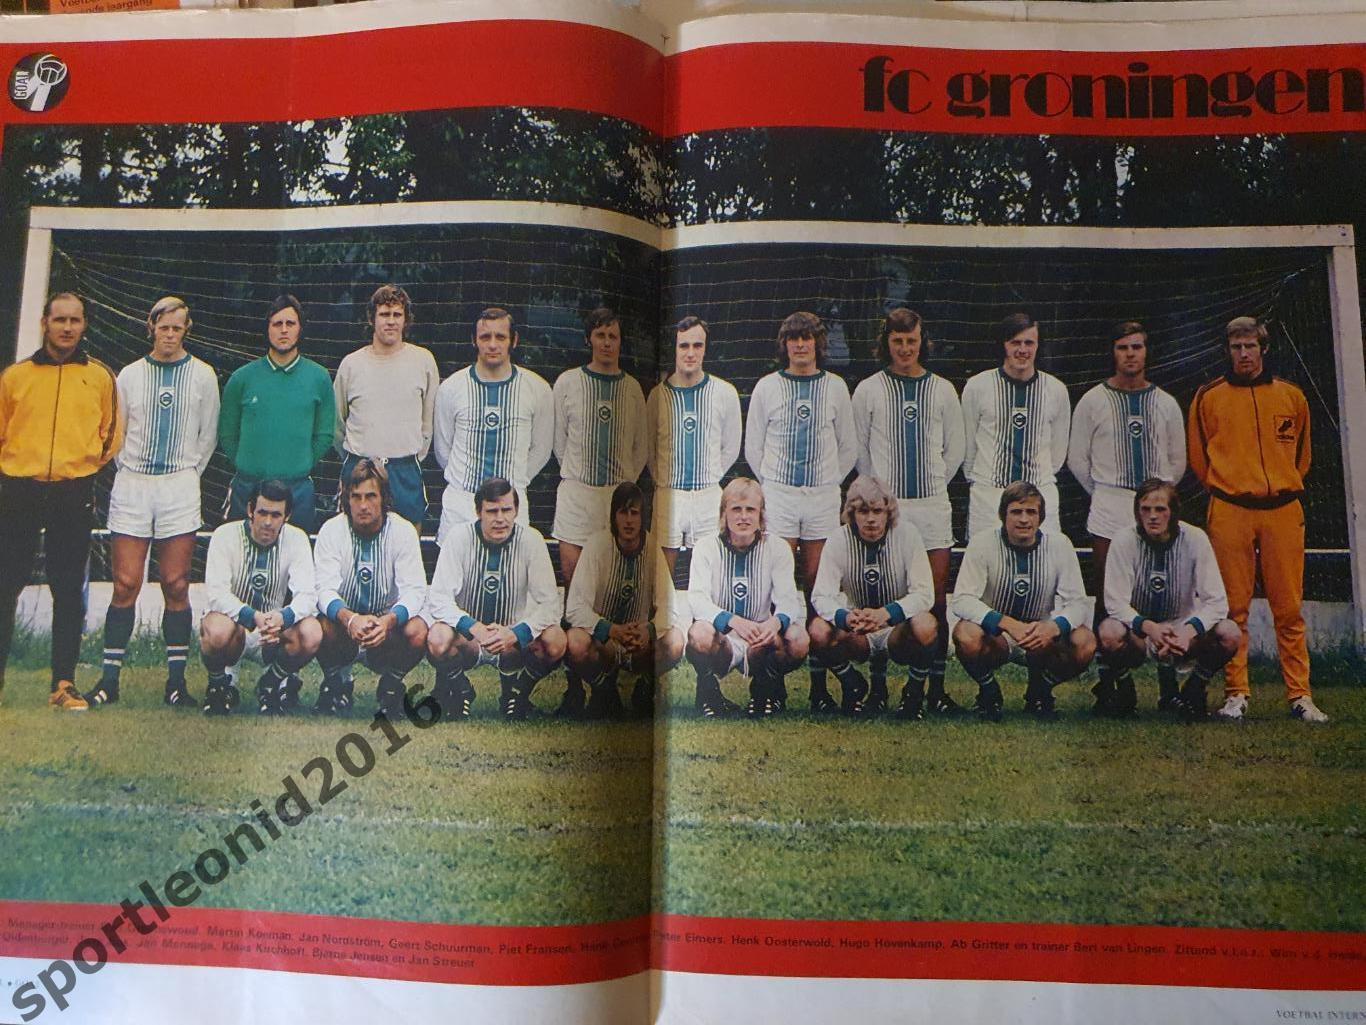 Voetbal International 1972.20 топ выпусков .3 7